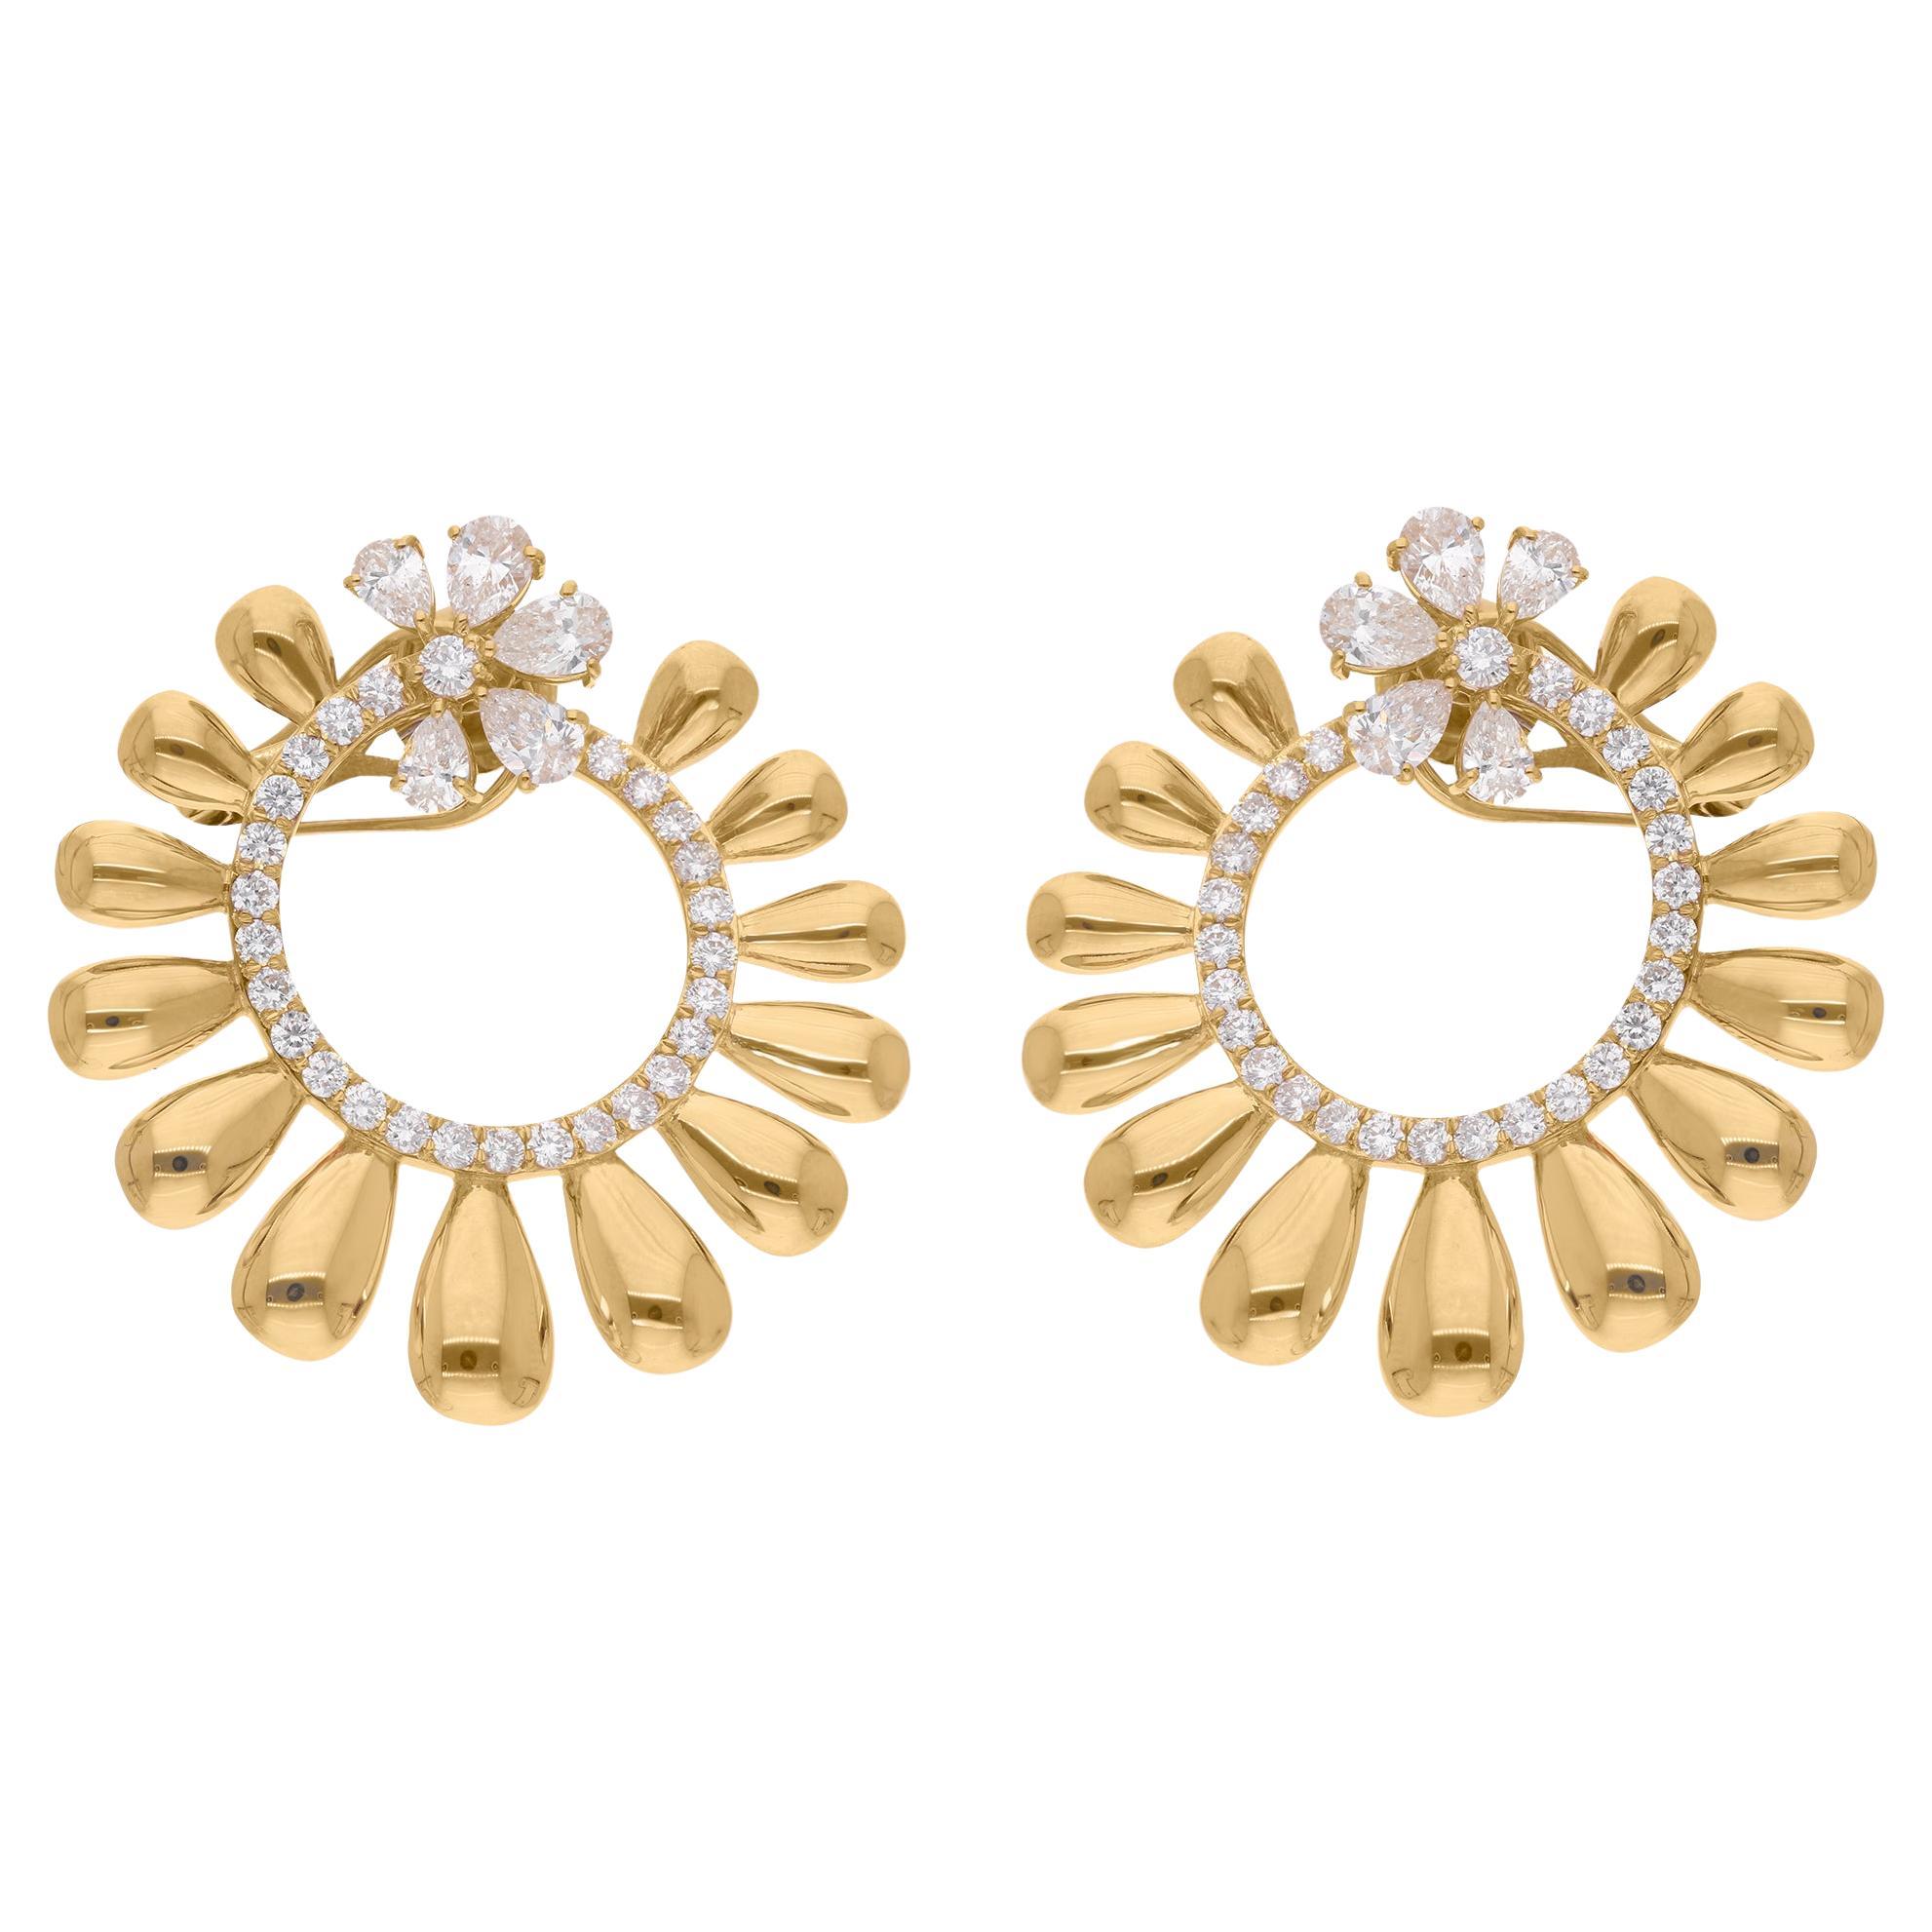 Real 3.79 Carat Diamond Pave Hoop Earrings 14 Karat Yellow Gold Handmade Jewelry